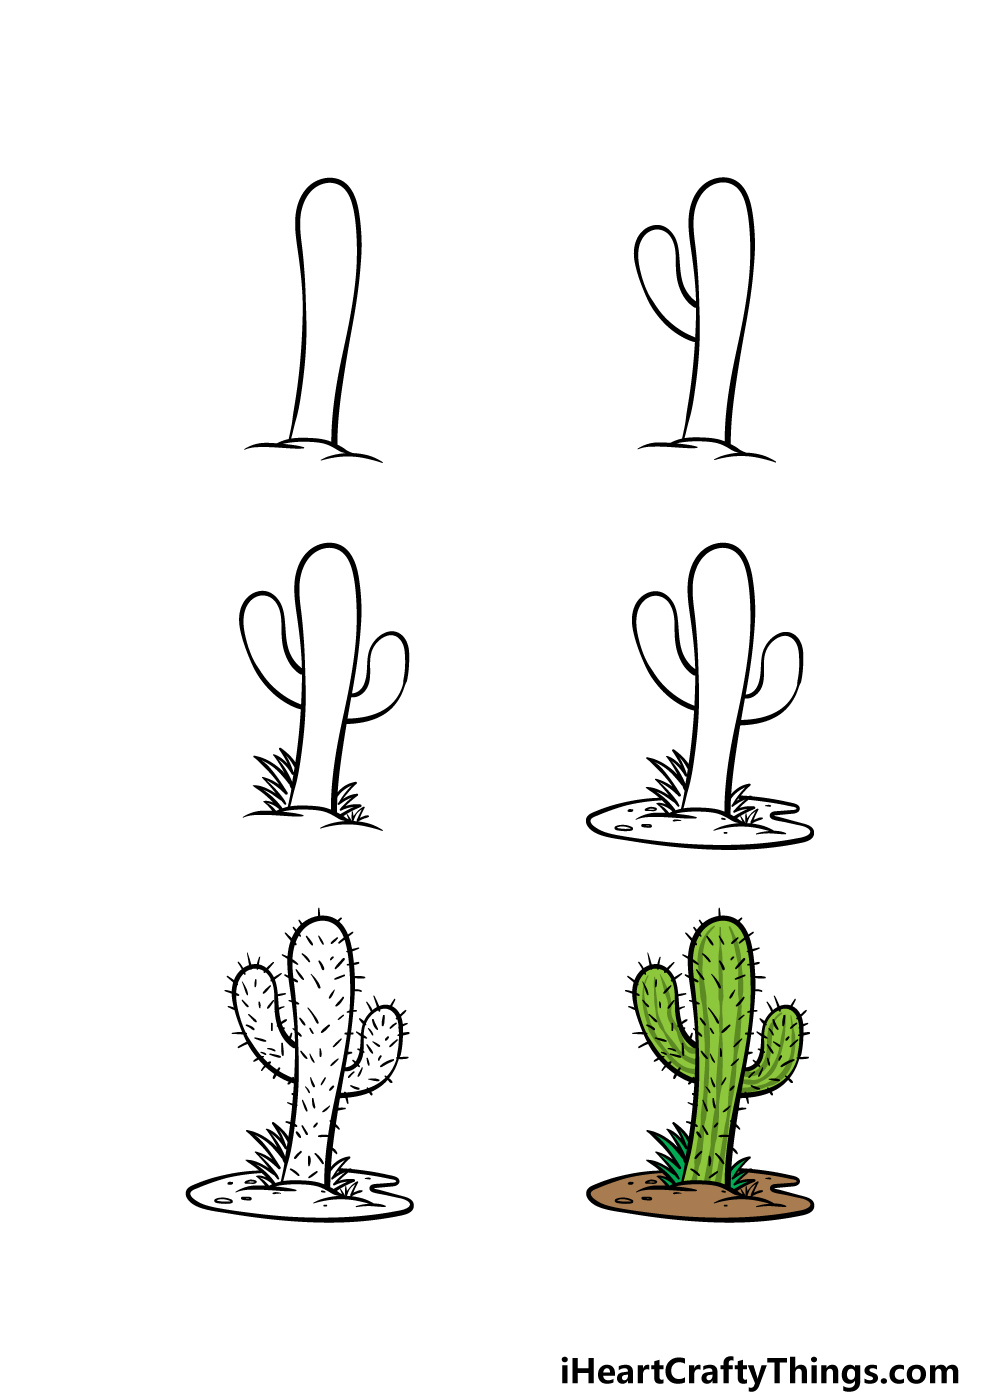 cactus pencil drawing - Google Search | Cactus drawing, Pencil drawings,  Still life drawing